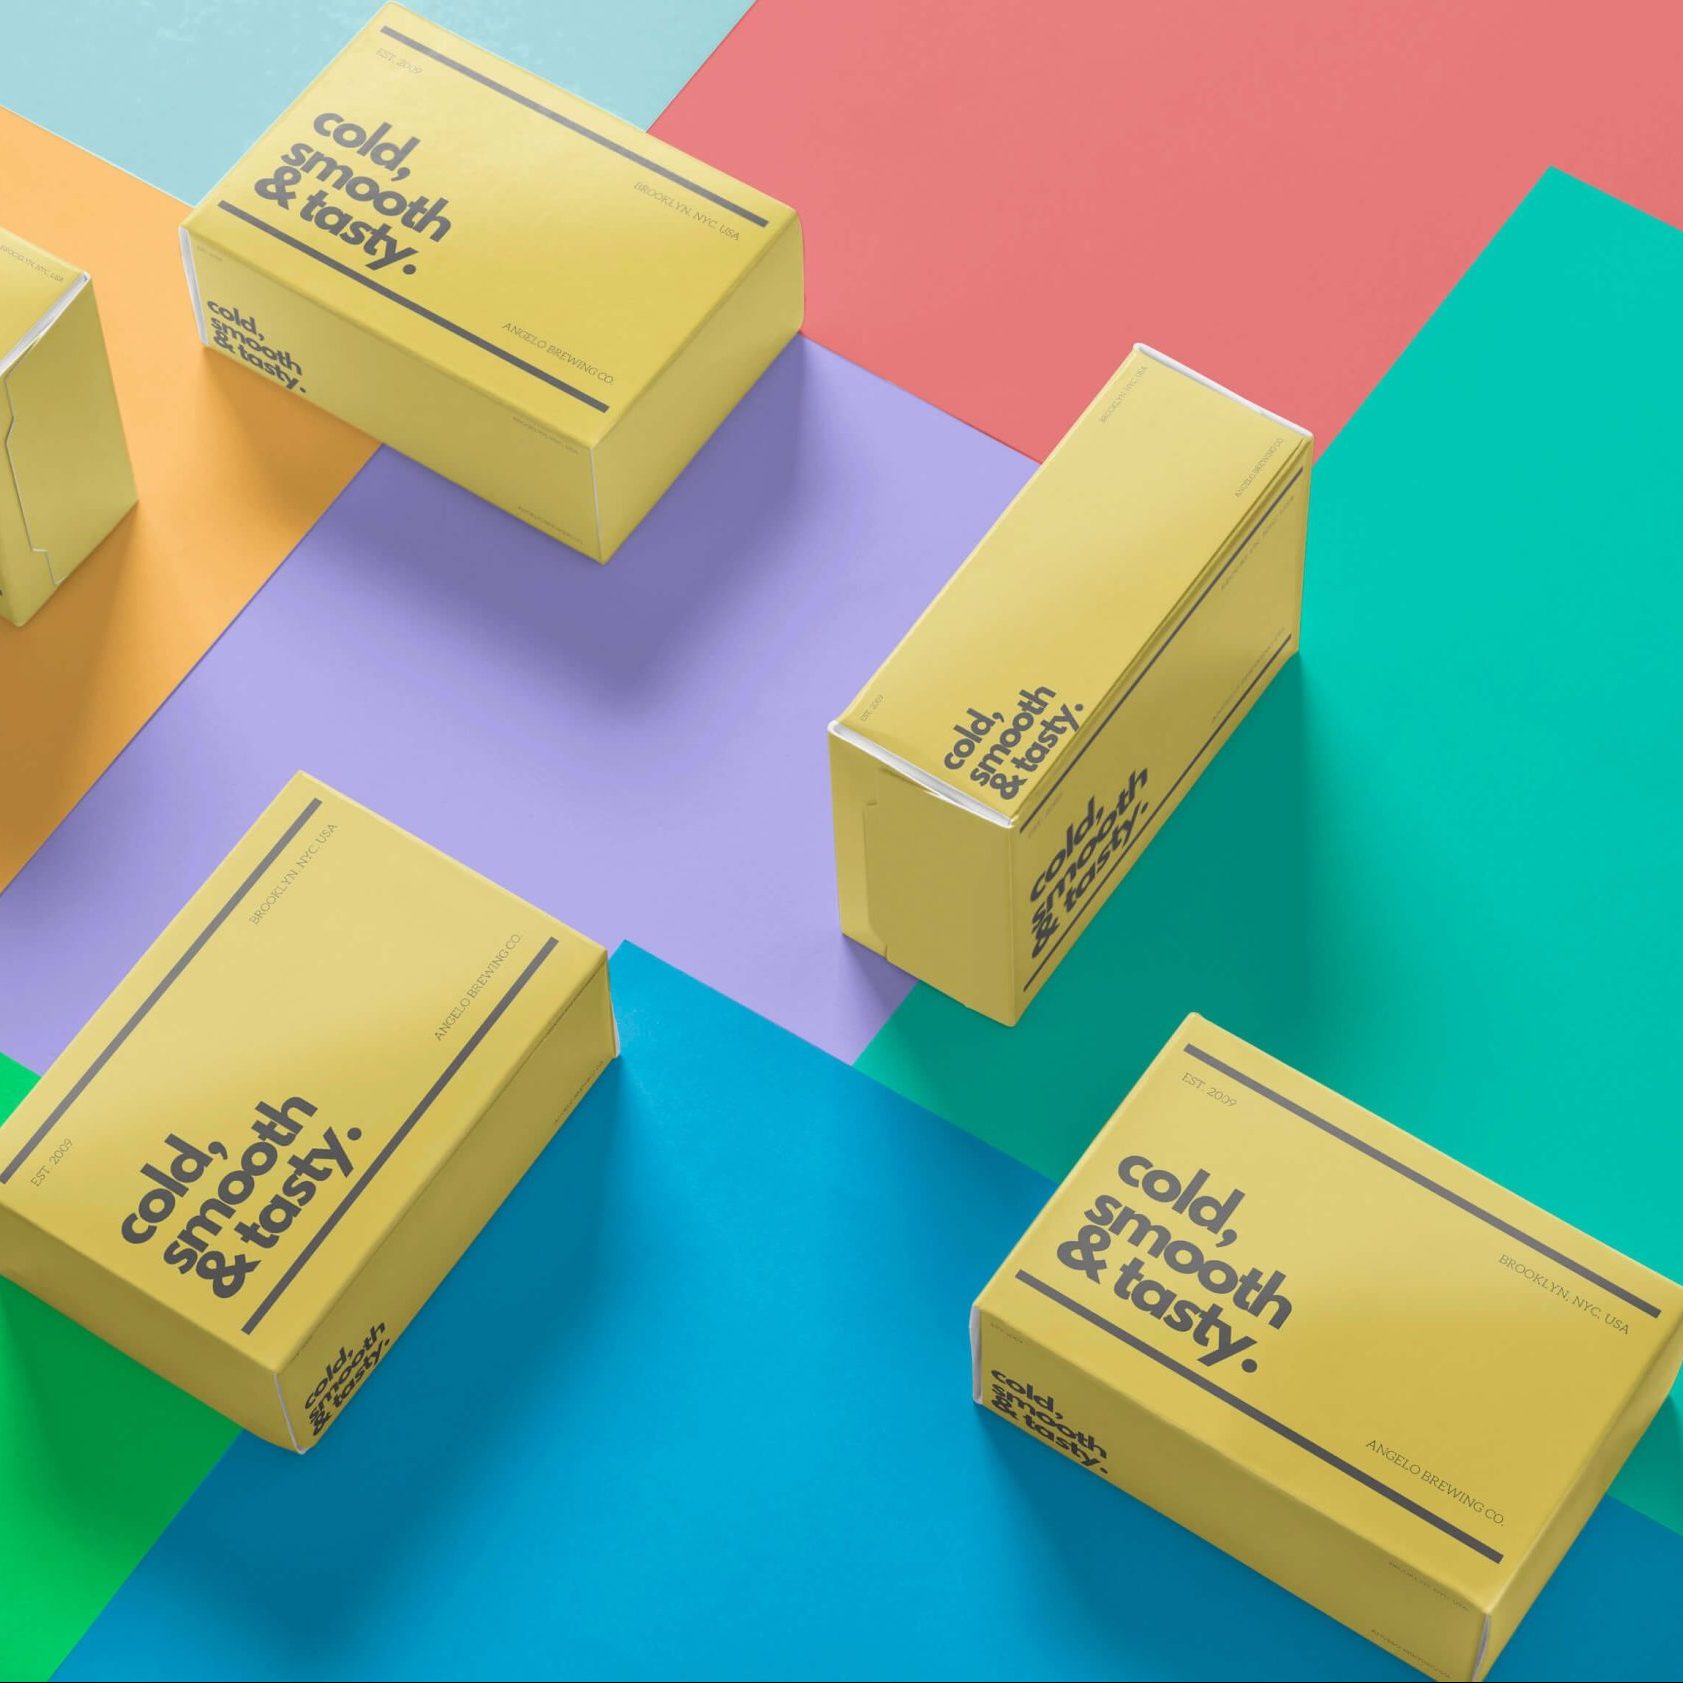 4 award-winning creative product packaging